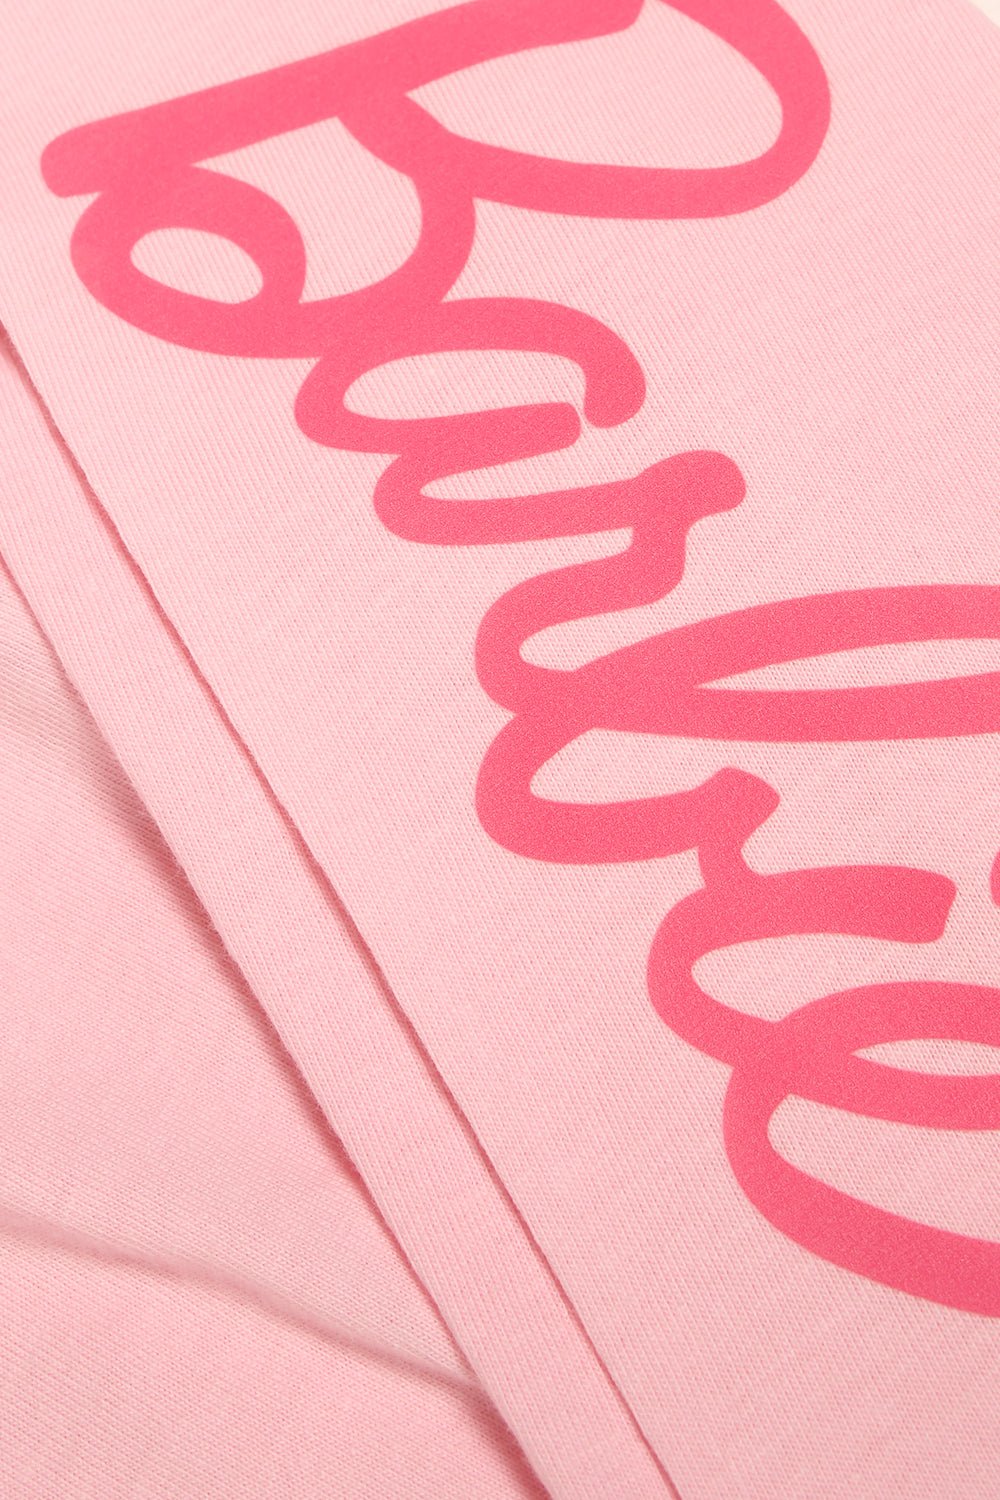 Barbie Girls Pyjamas Long Sleeved Kids Pyjamas Set Official Merchandise - Brand Threads